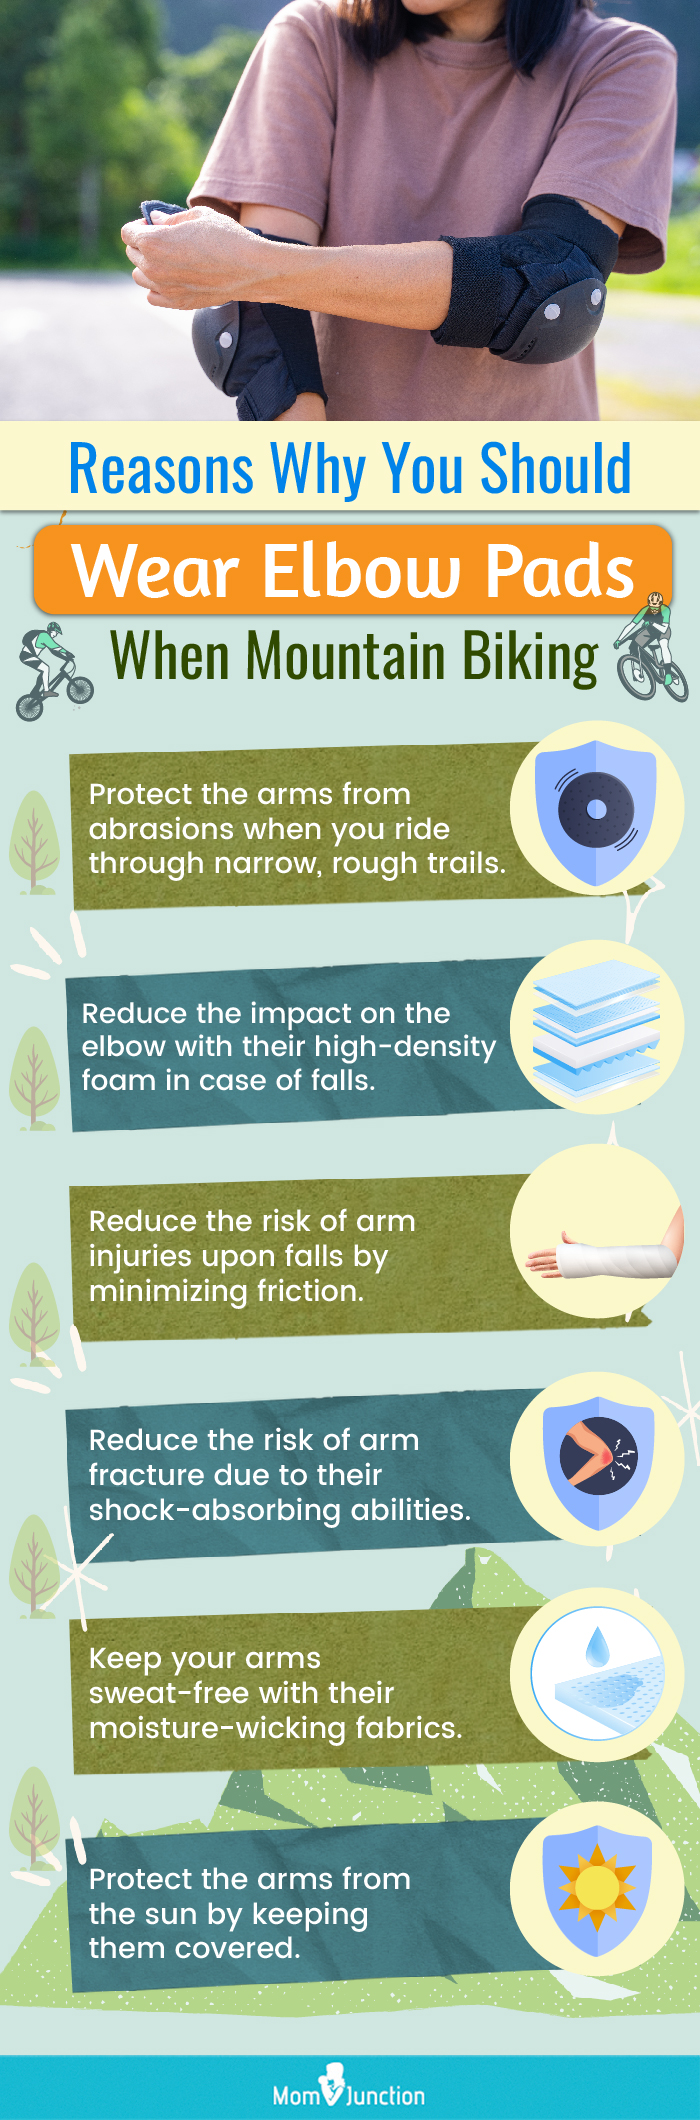 Reasons Why You Should Wear Elbow Pads When Mountain Biking (infographic)